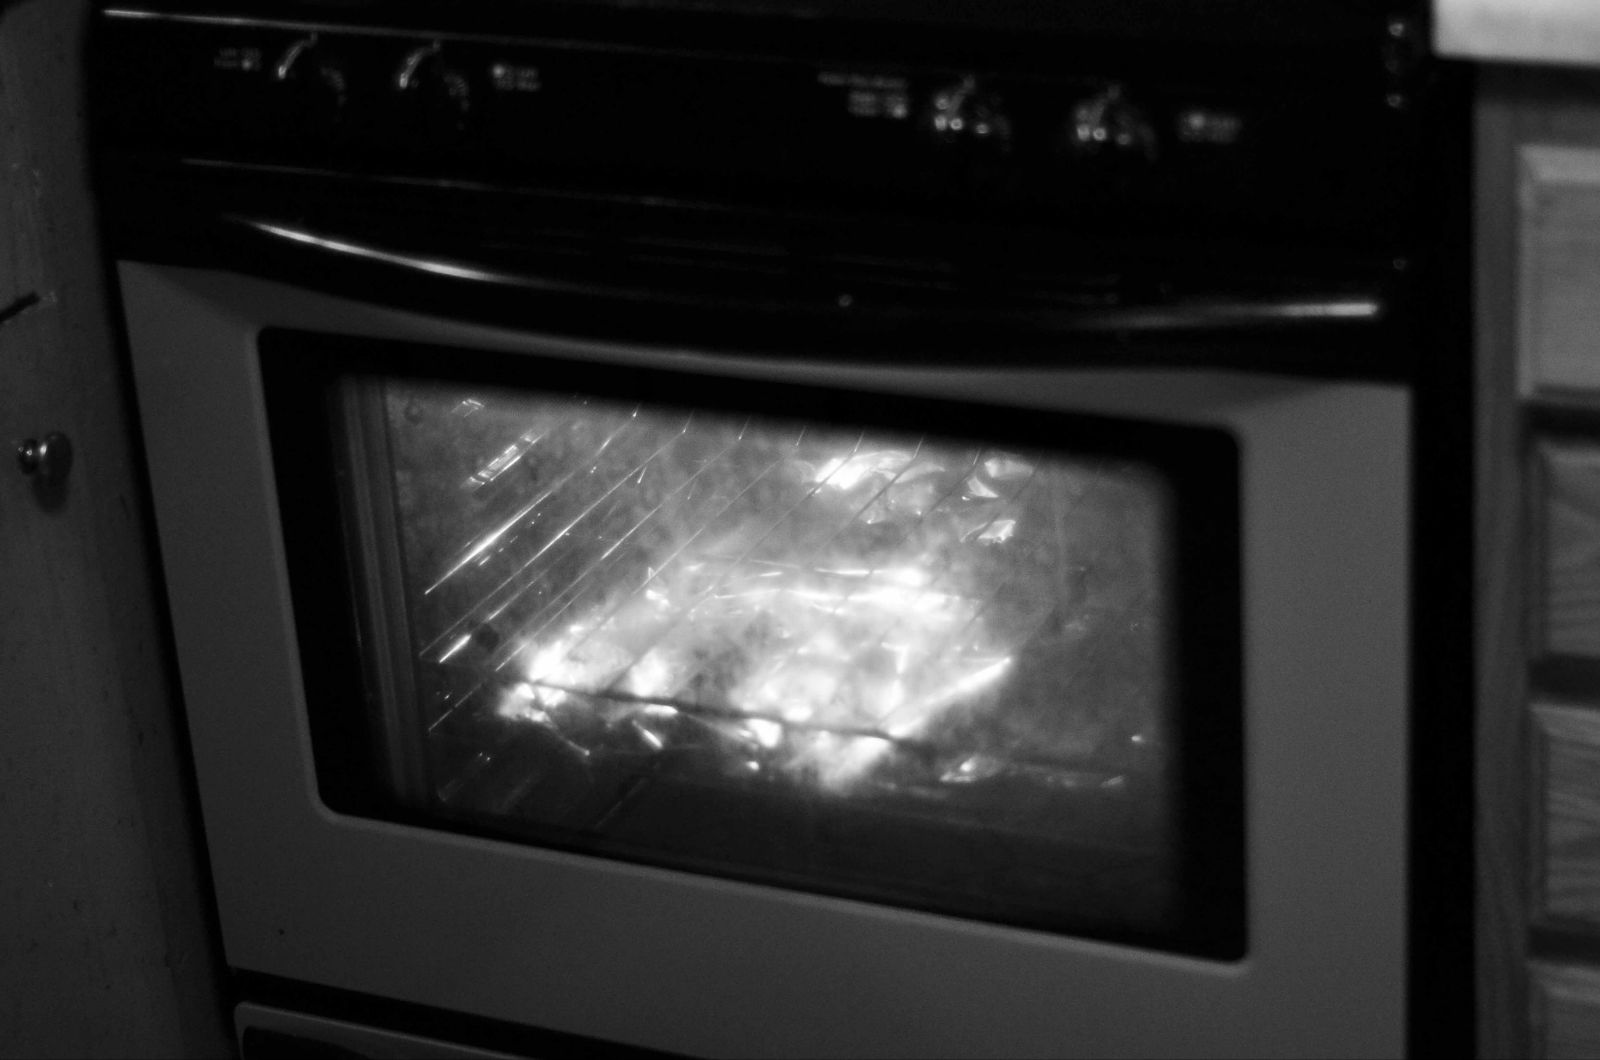 an oven is shown with the door open